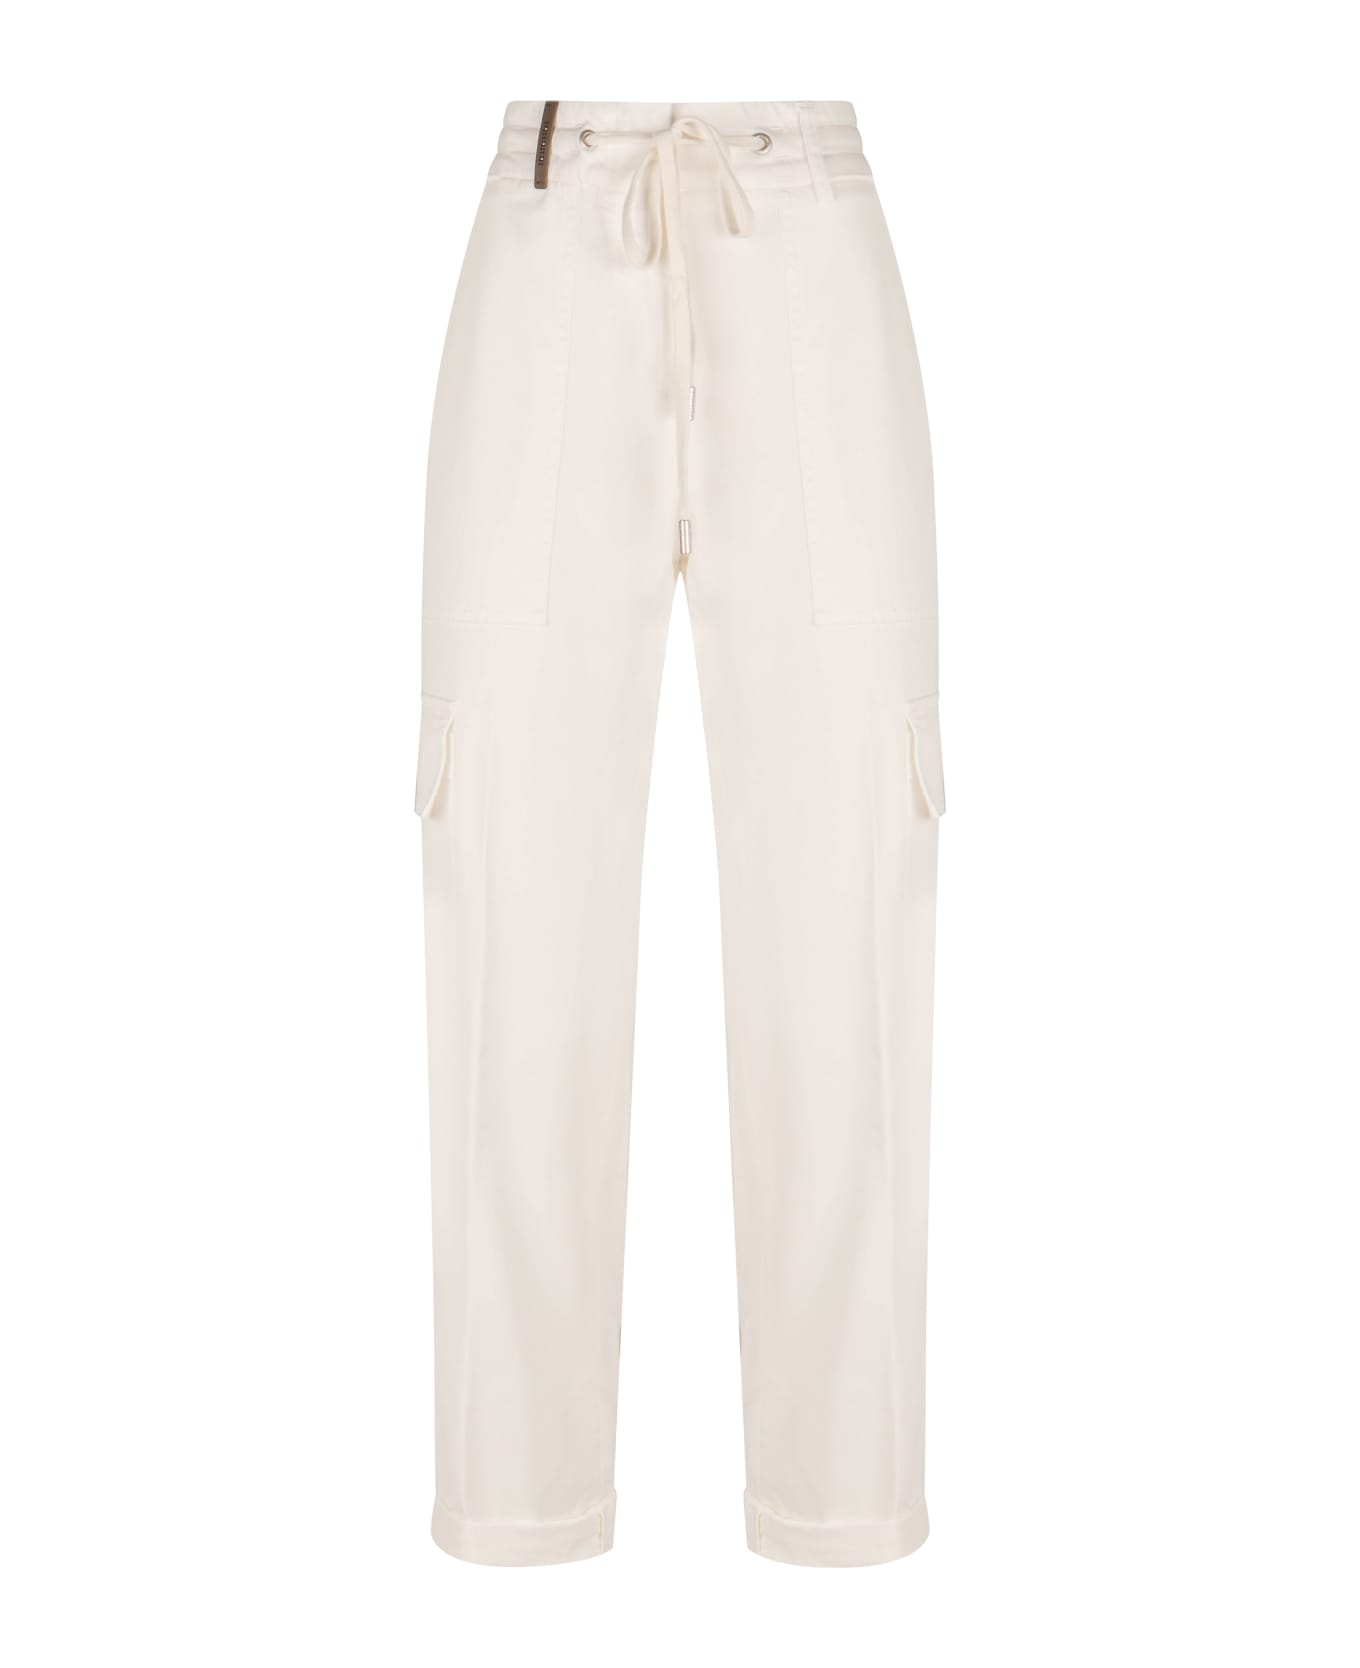 Peserico Cotton Trousers - White ボトムス